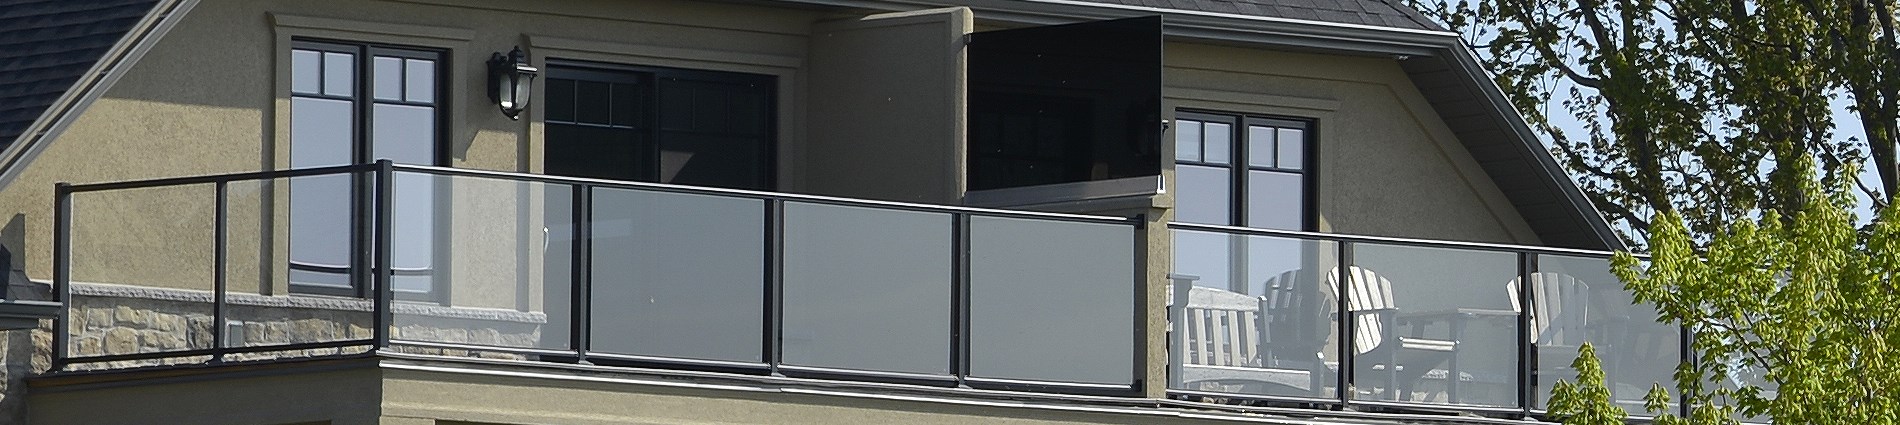 Balconies Decks and Porches